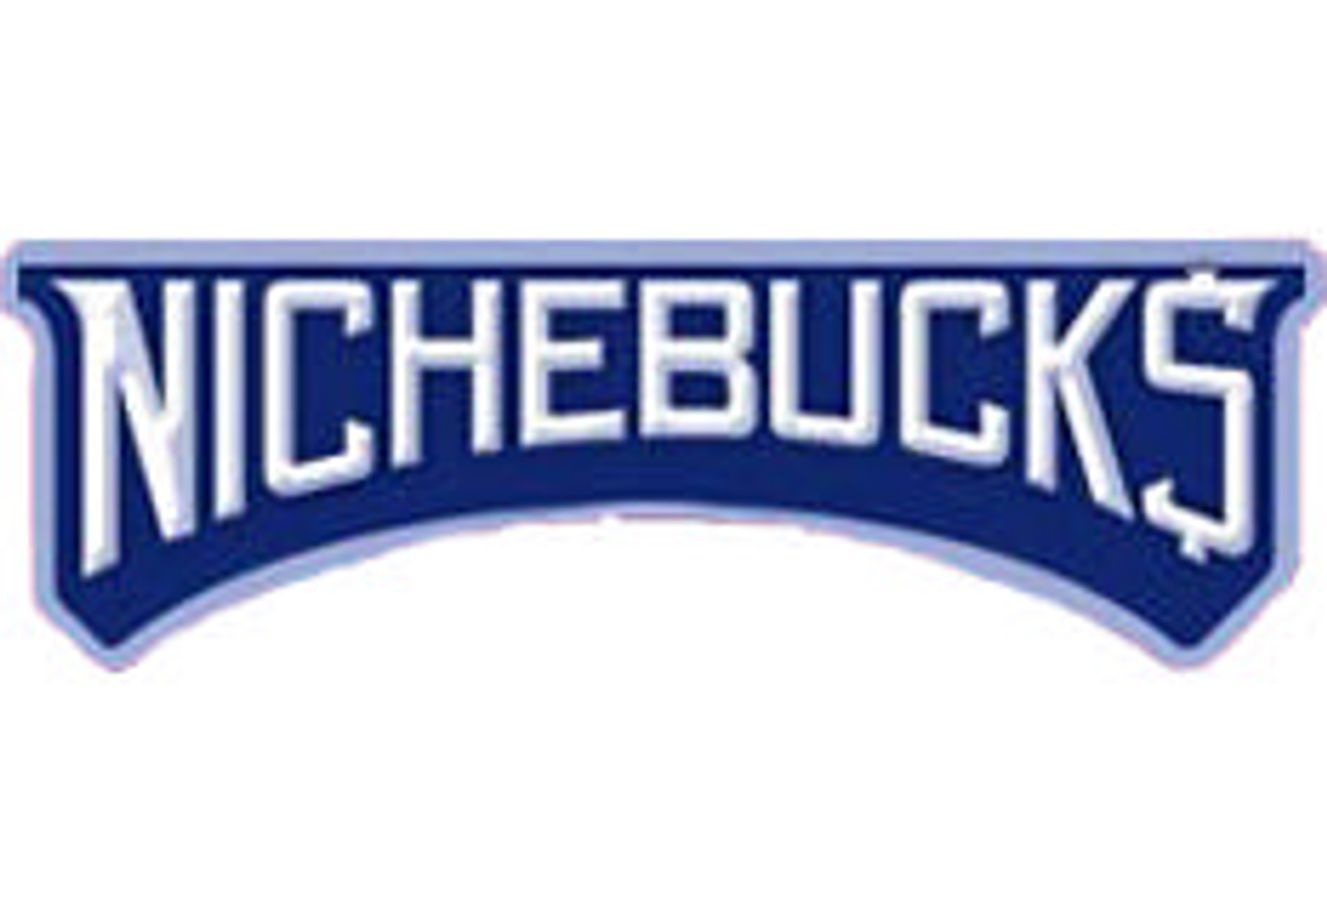 NicheBucks